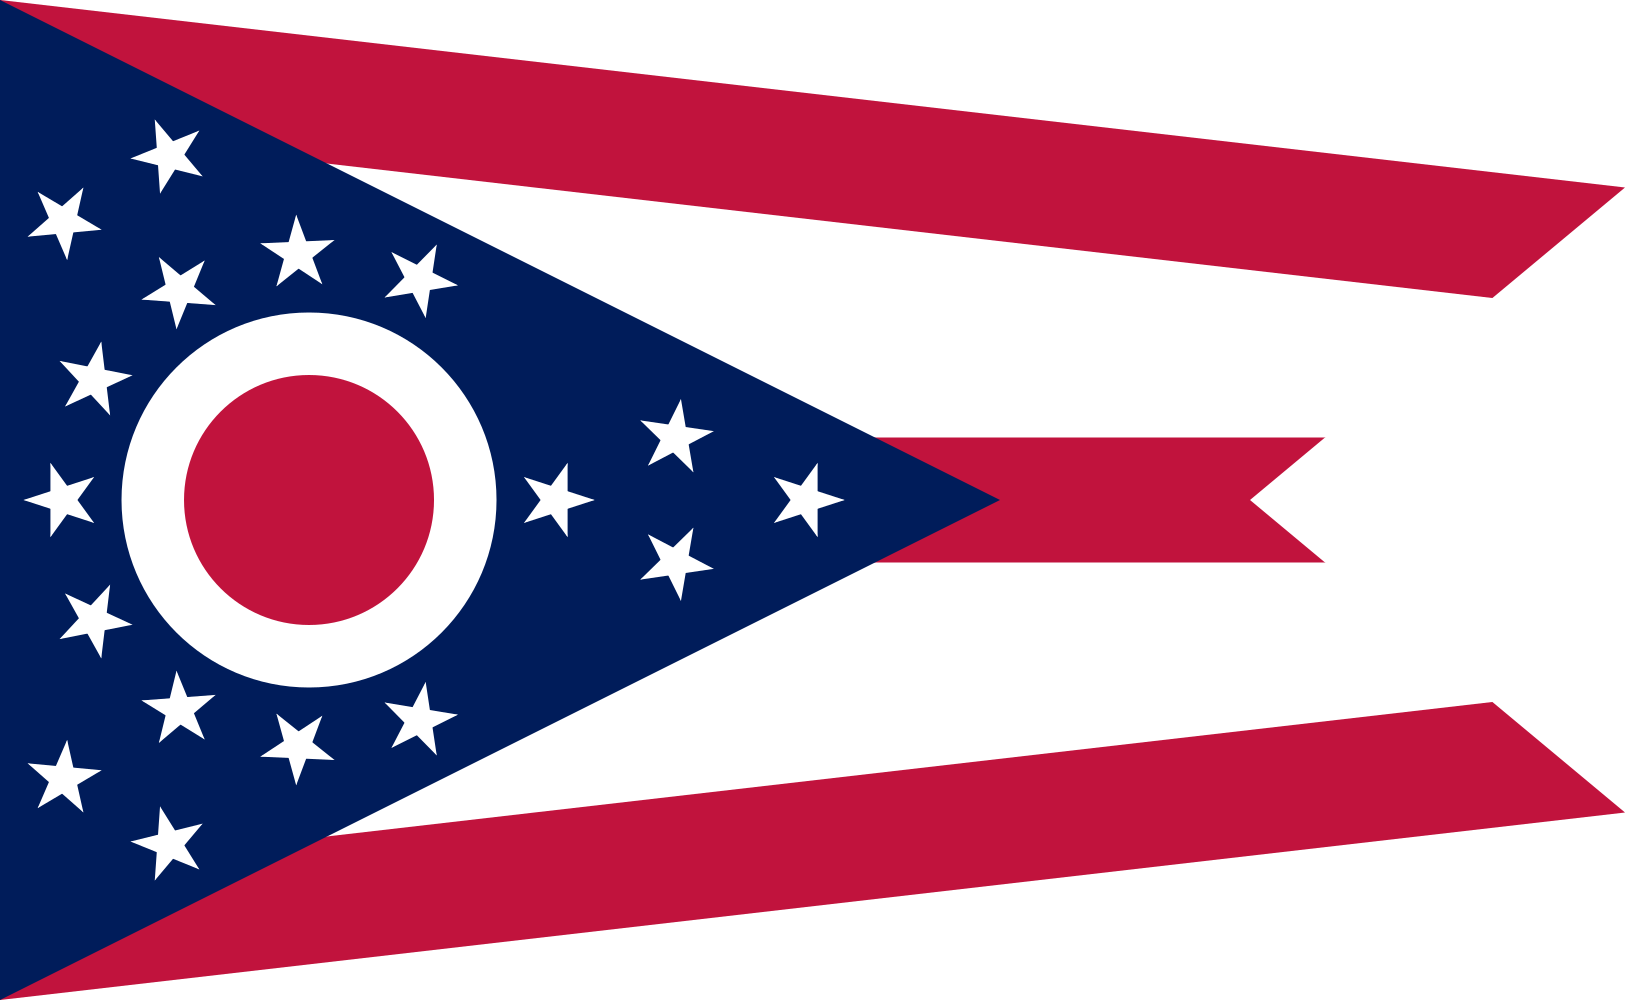 Free Ohio Flag Images: AI, EPS, GIF, JPG, PDF, PNG, SVG and more!